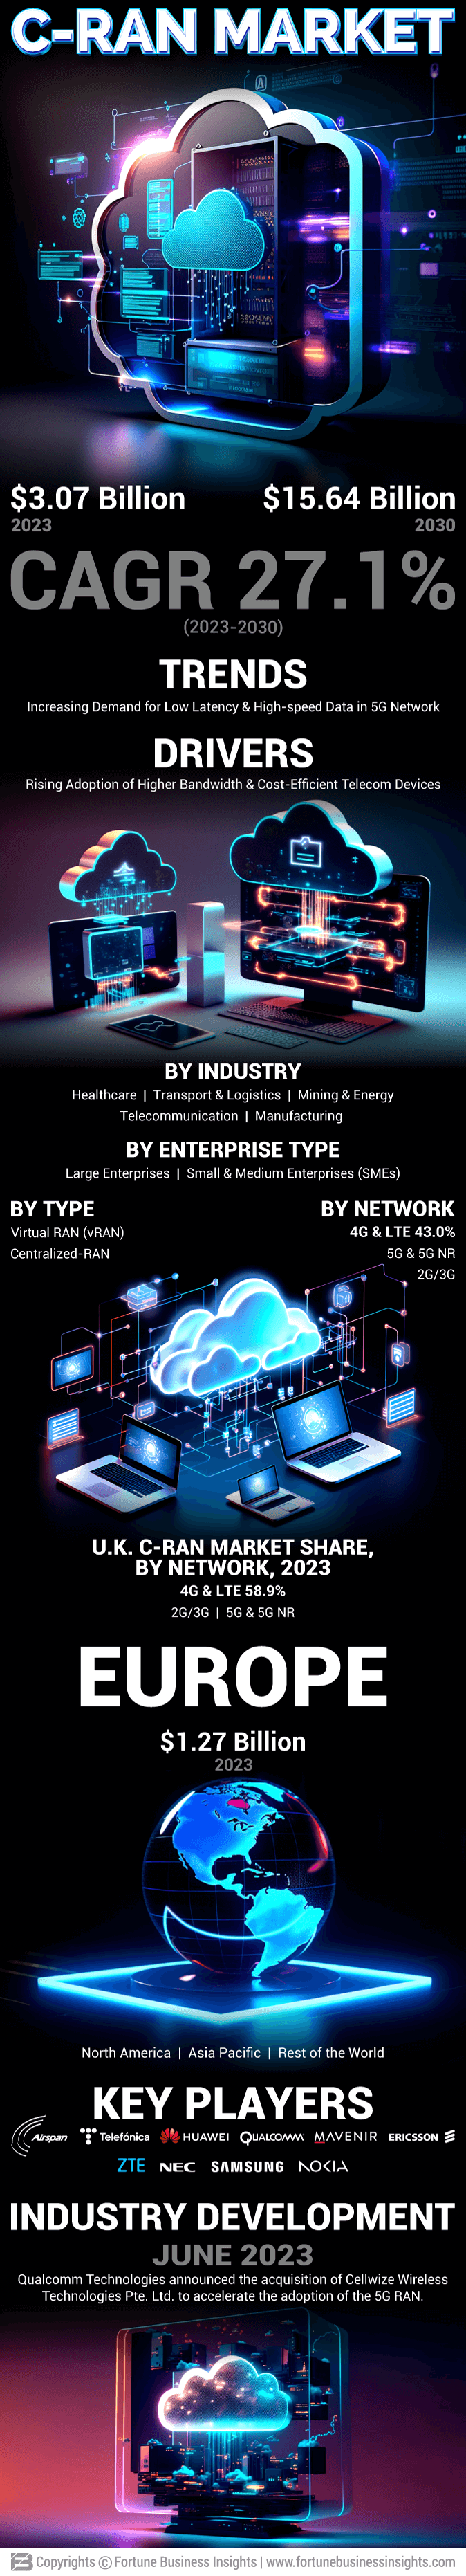 Cloud Radio Access Network (C-RAN) market